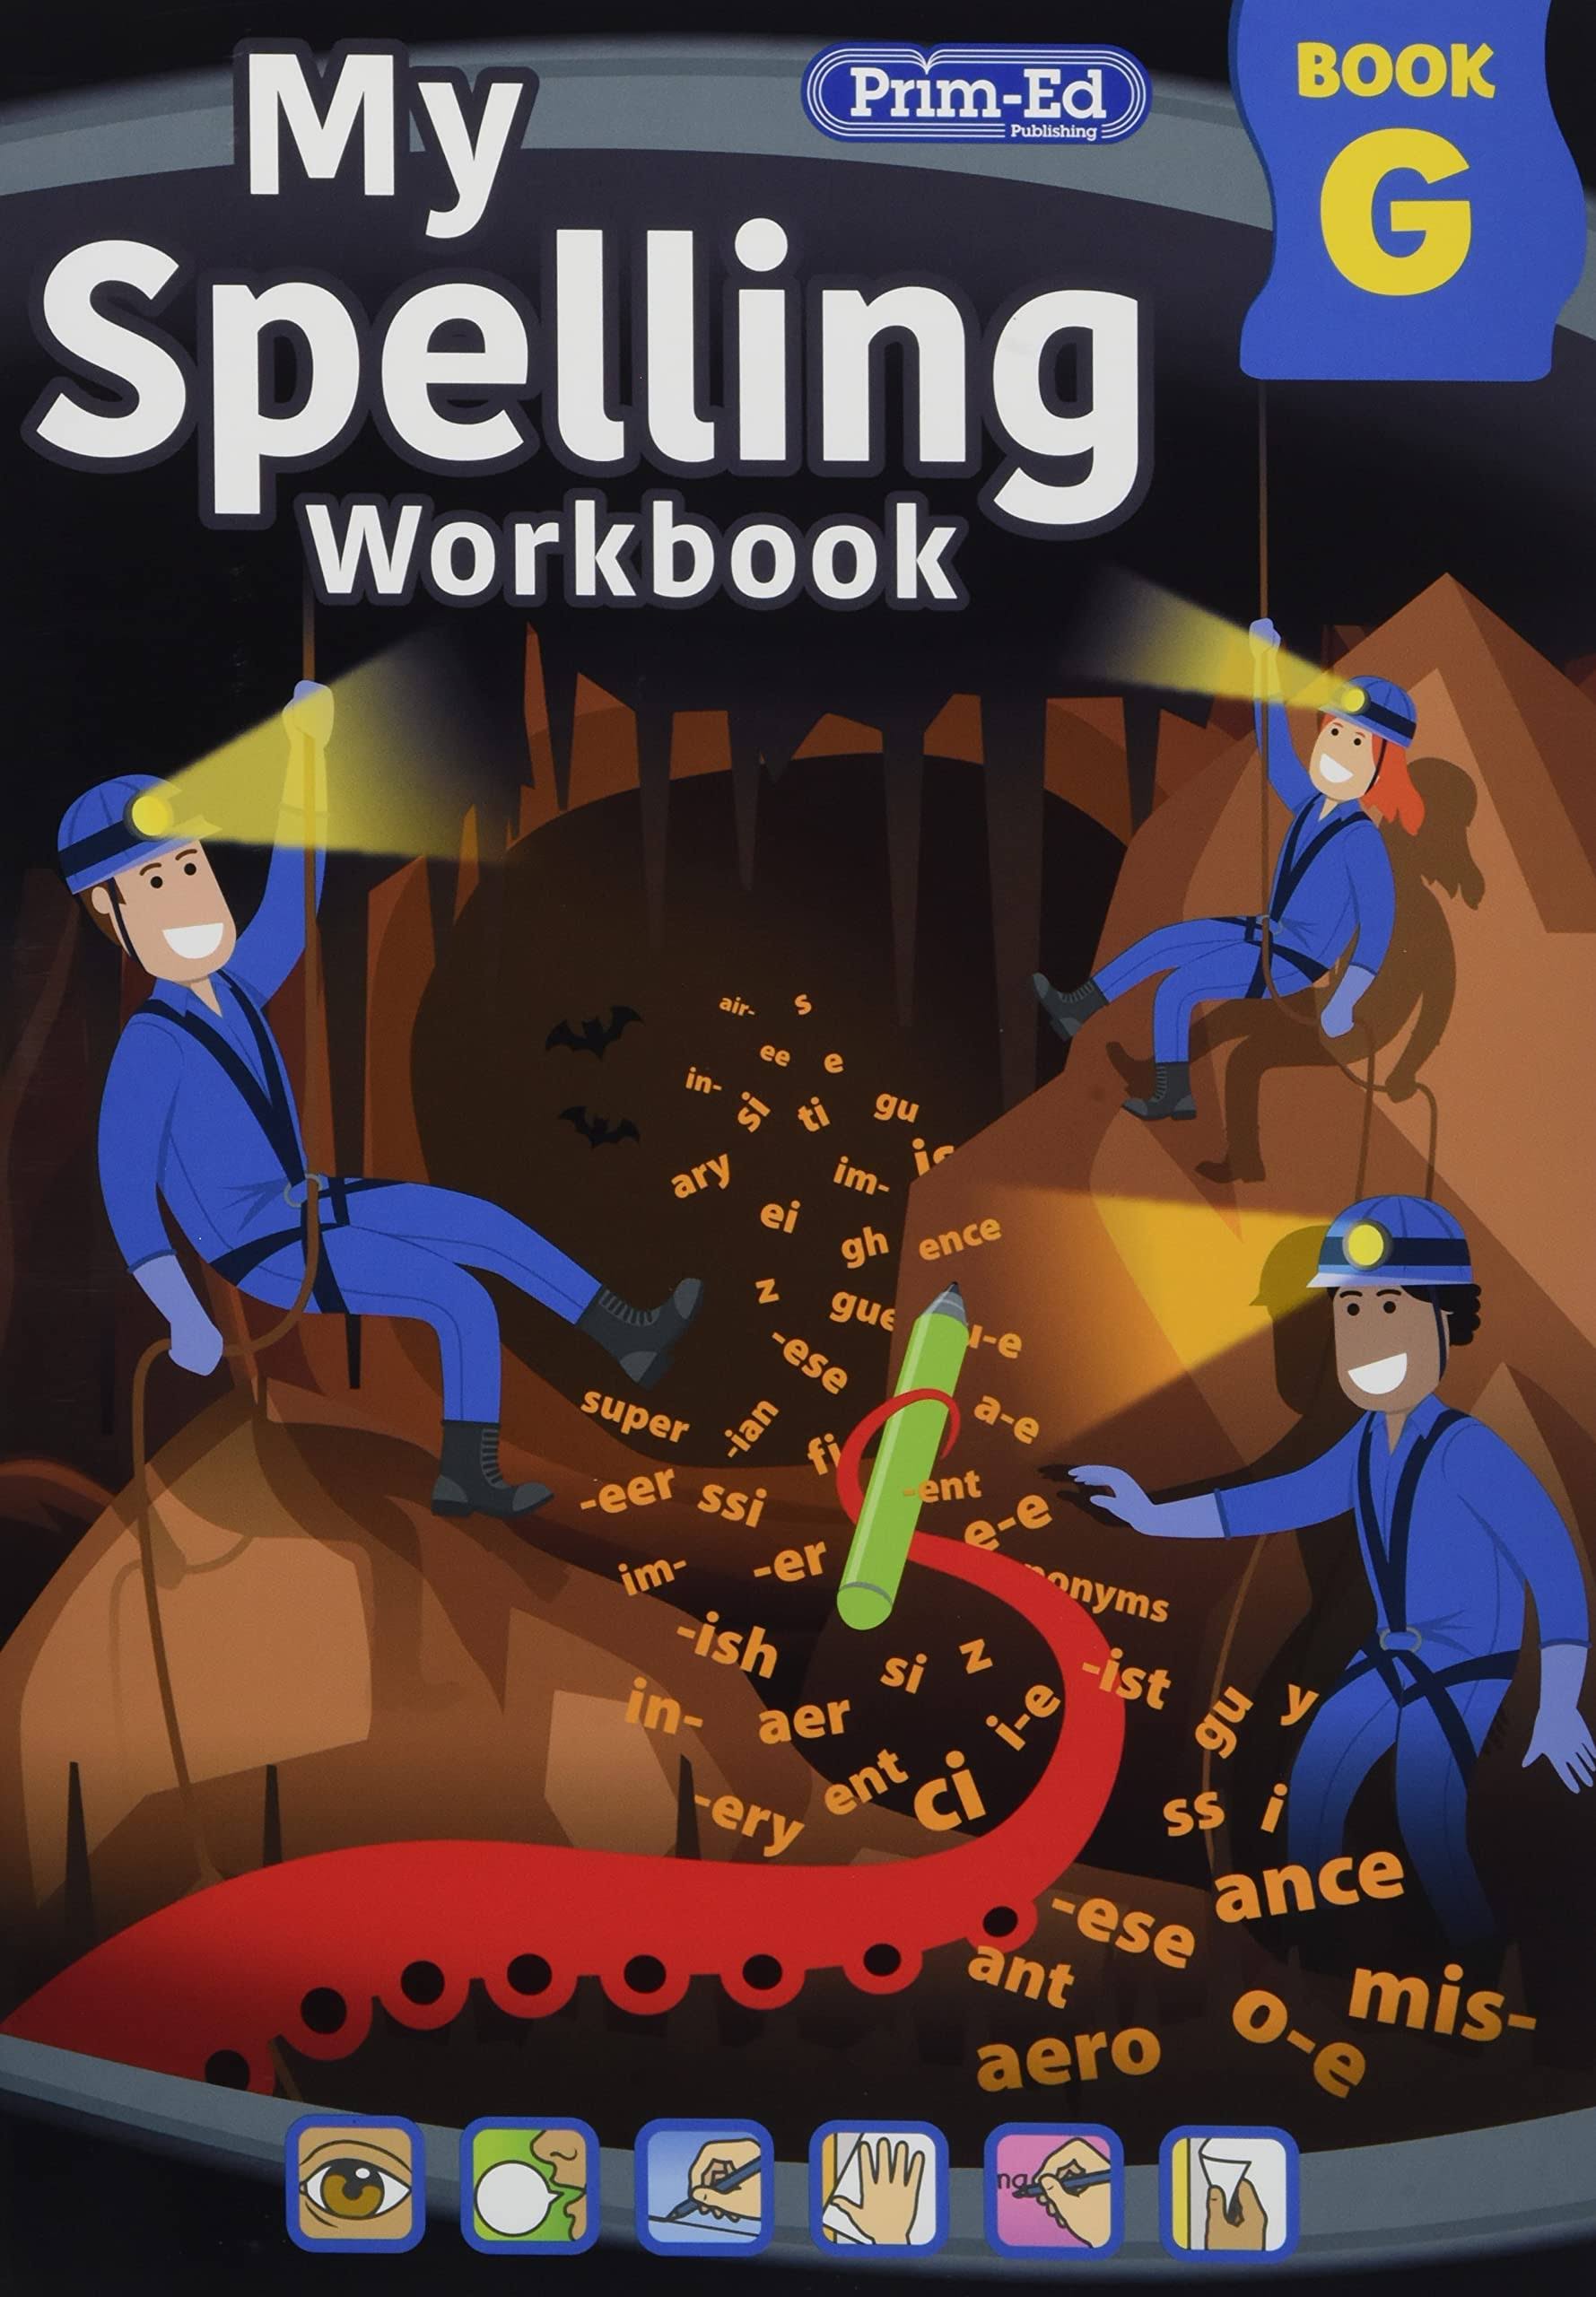 My Spelling Workbook Book G [Book]